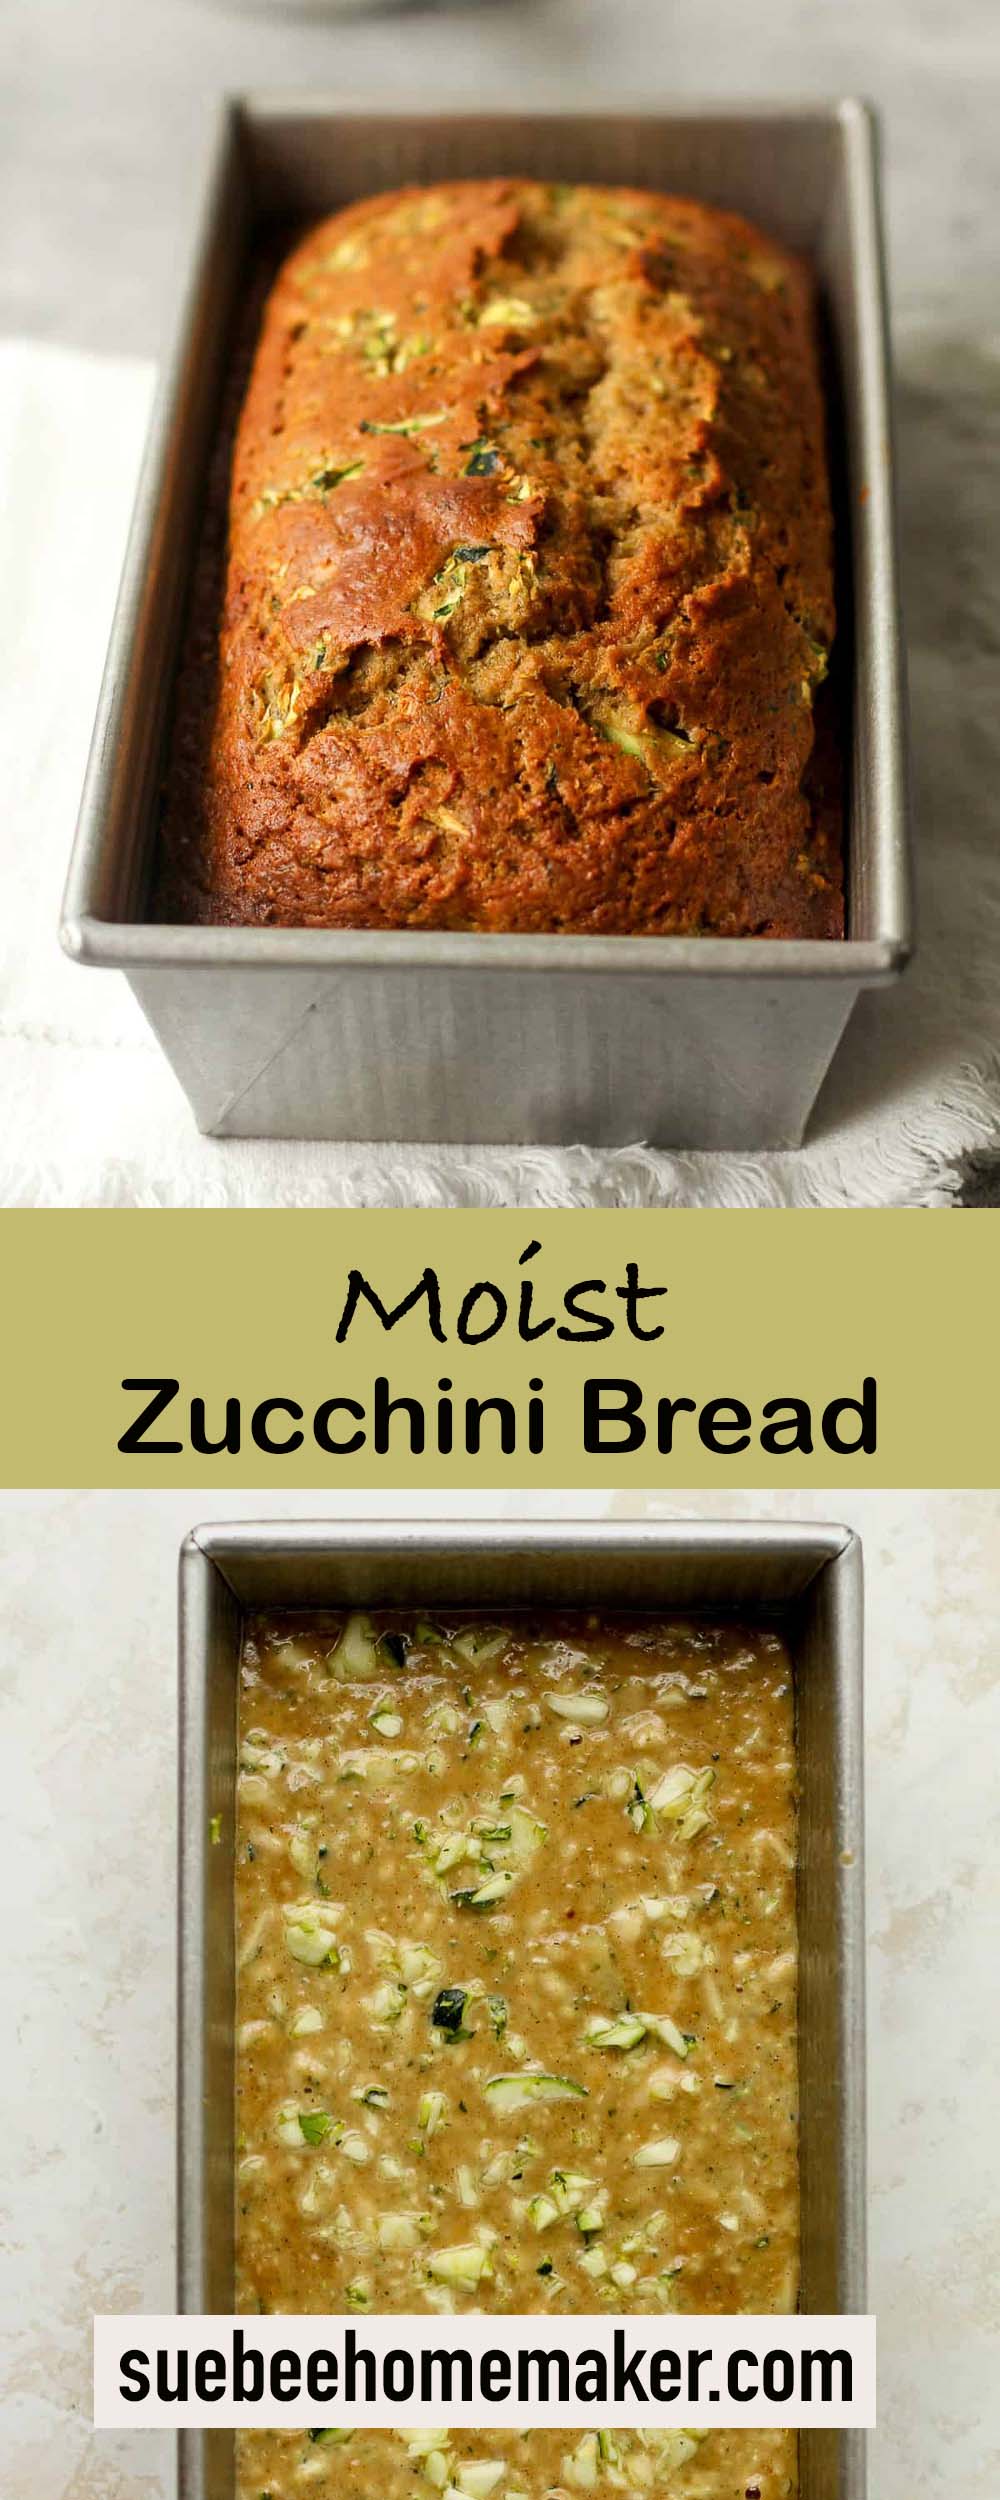 Two photos of moist zucchini bread.